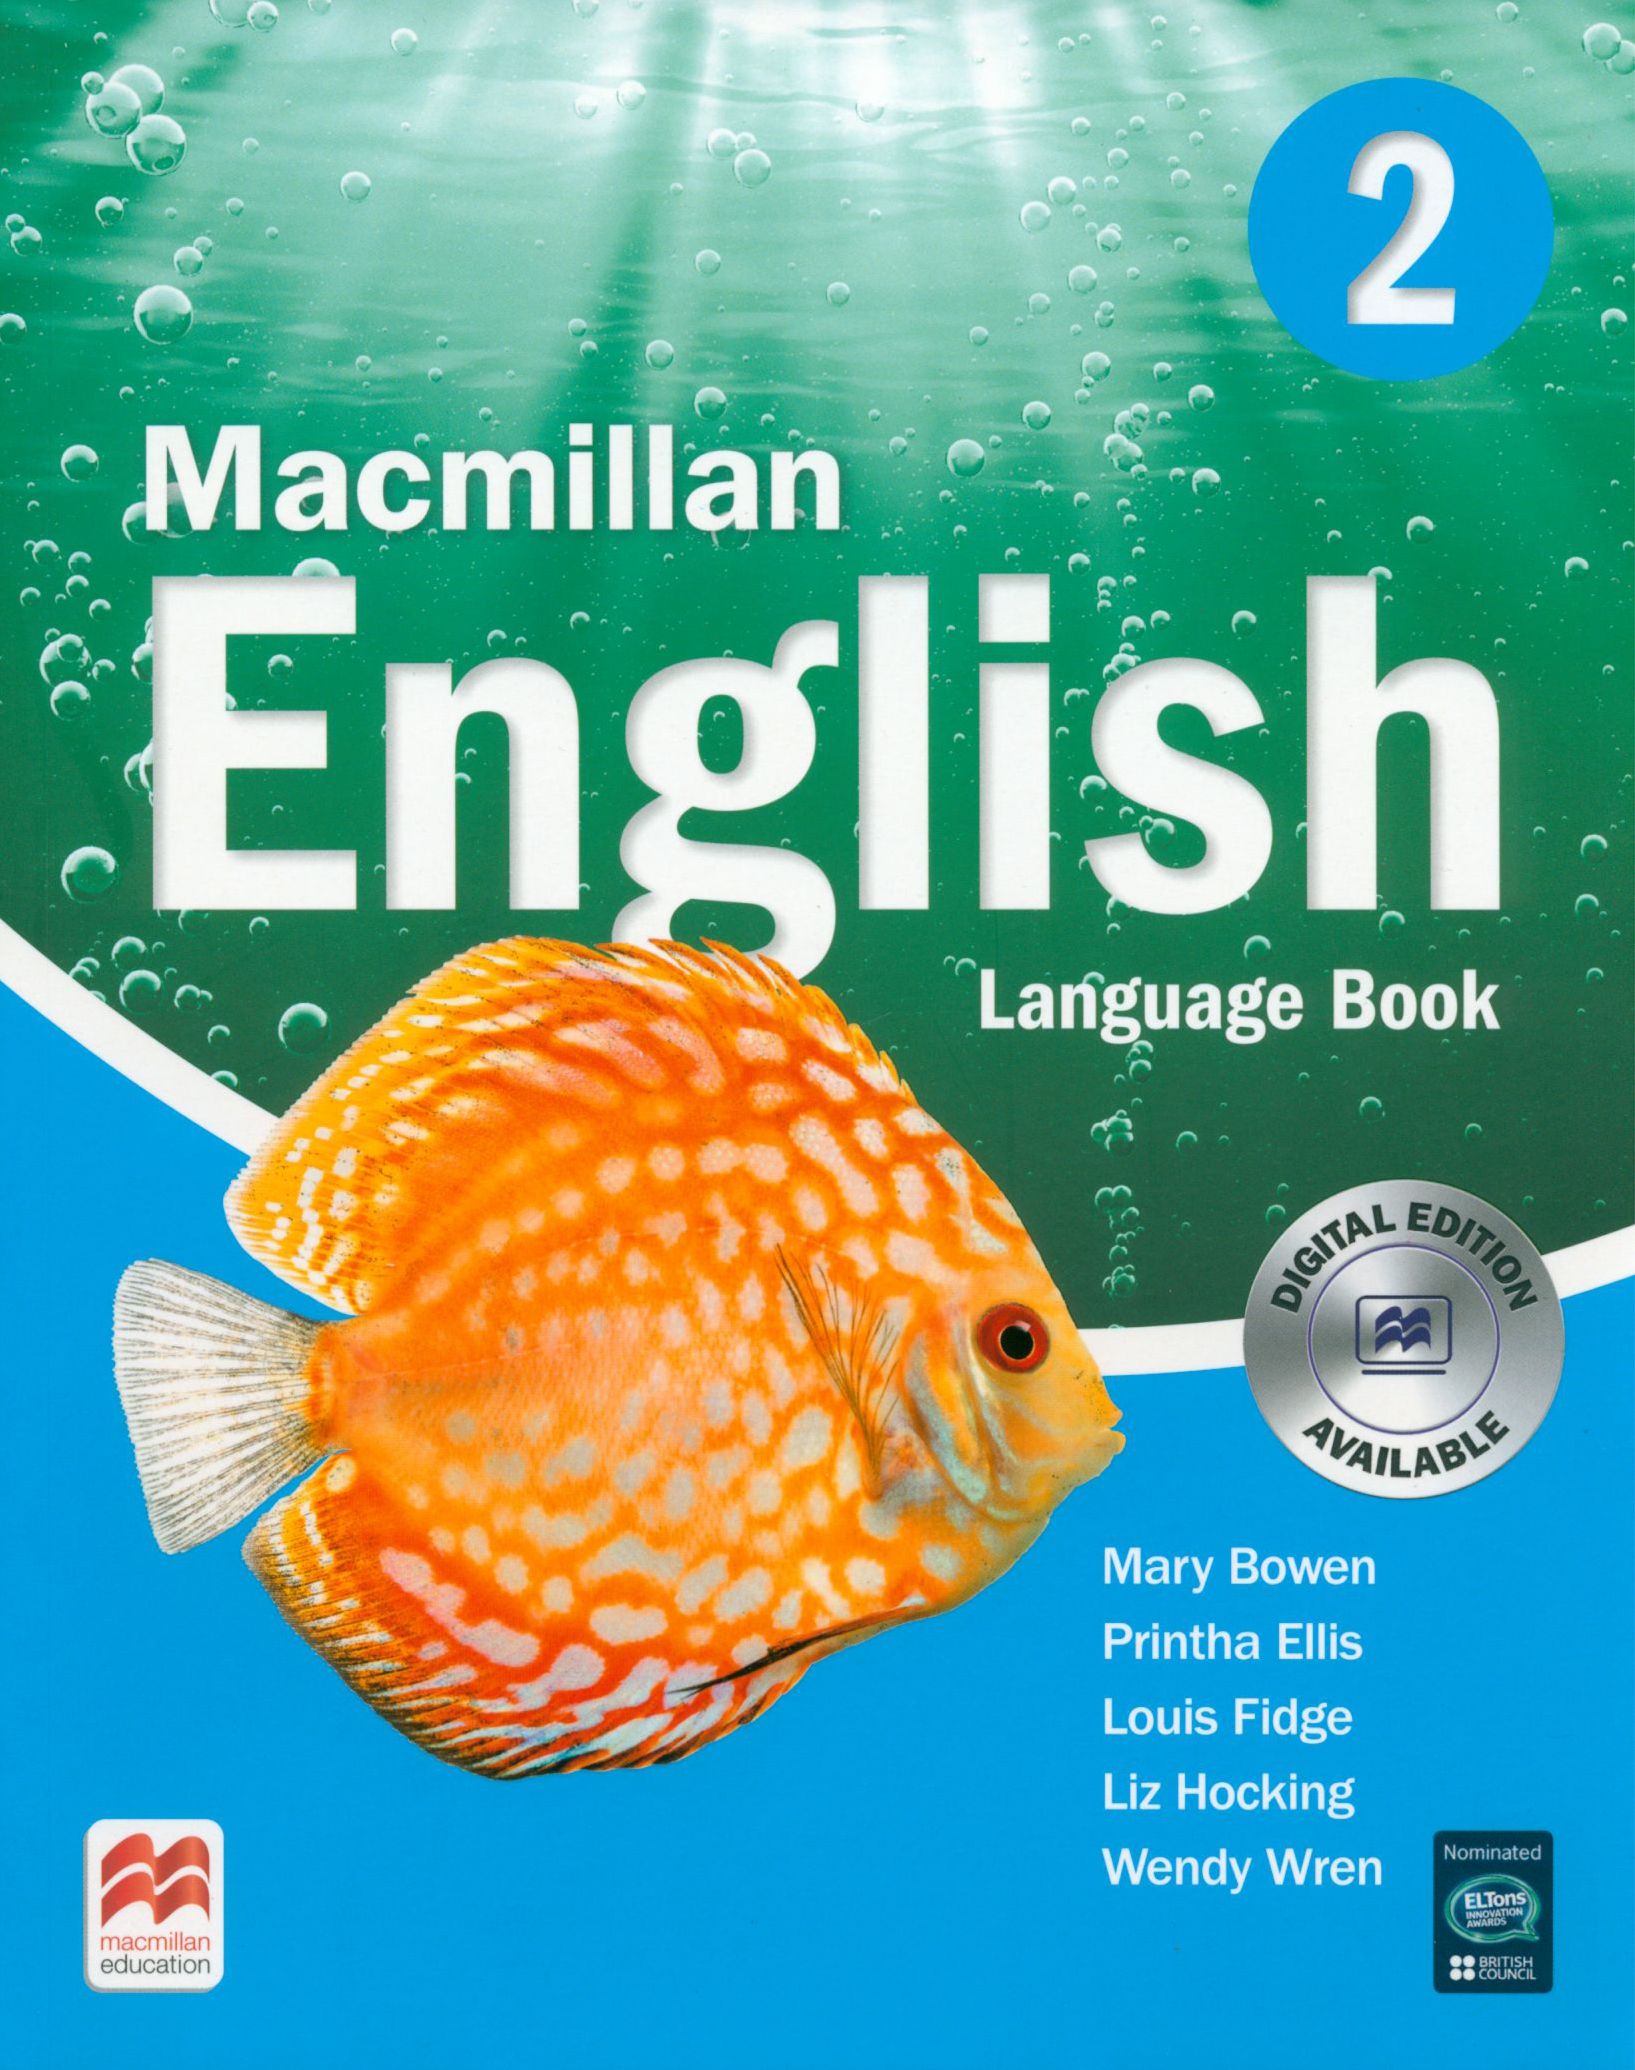 Macmillan s book. Macmillan English language book. Macmillan книги. Macmillan English книга. English Macmillan a2.